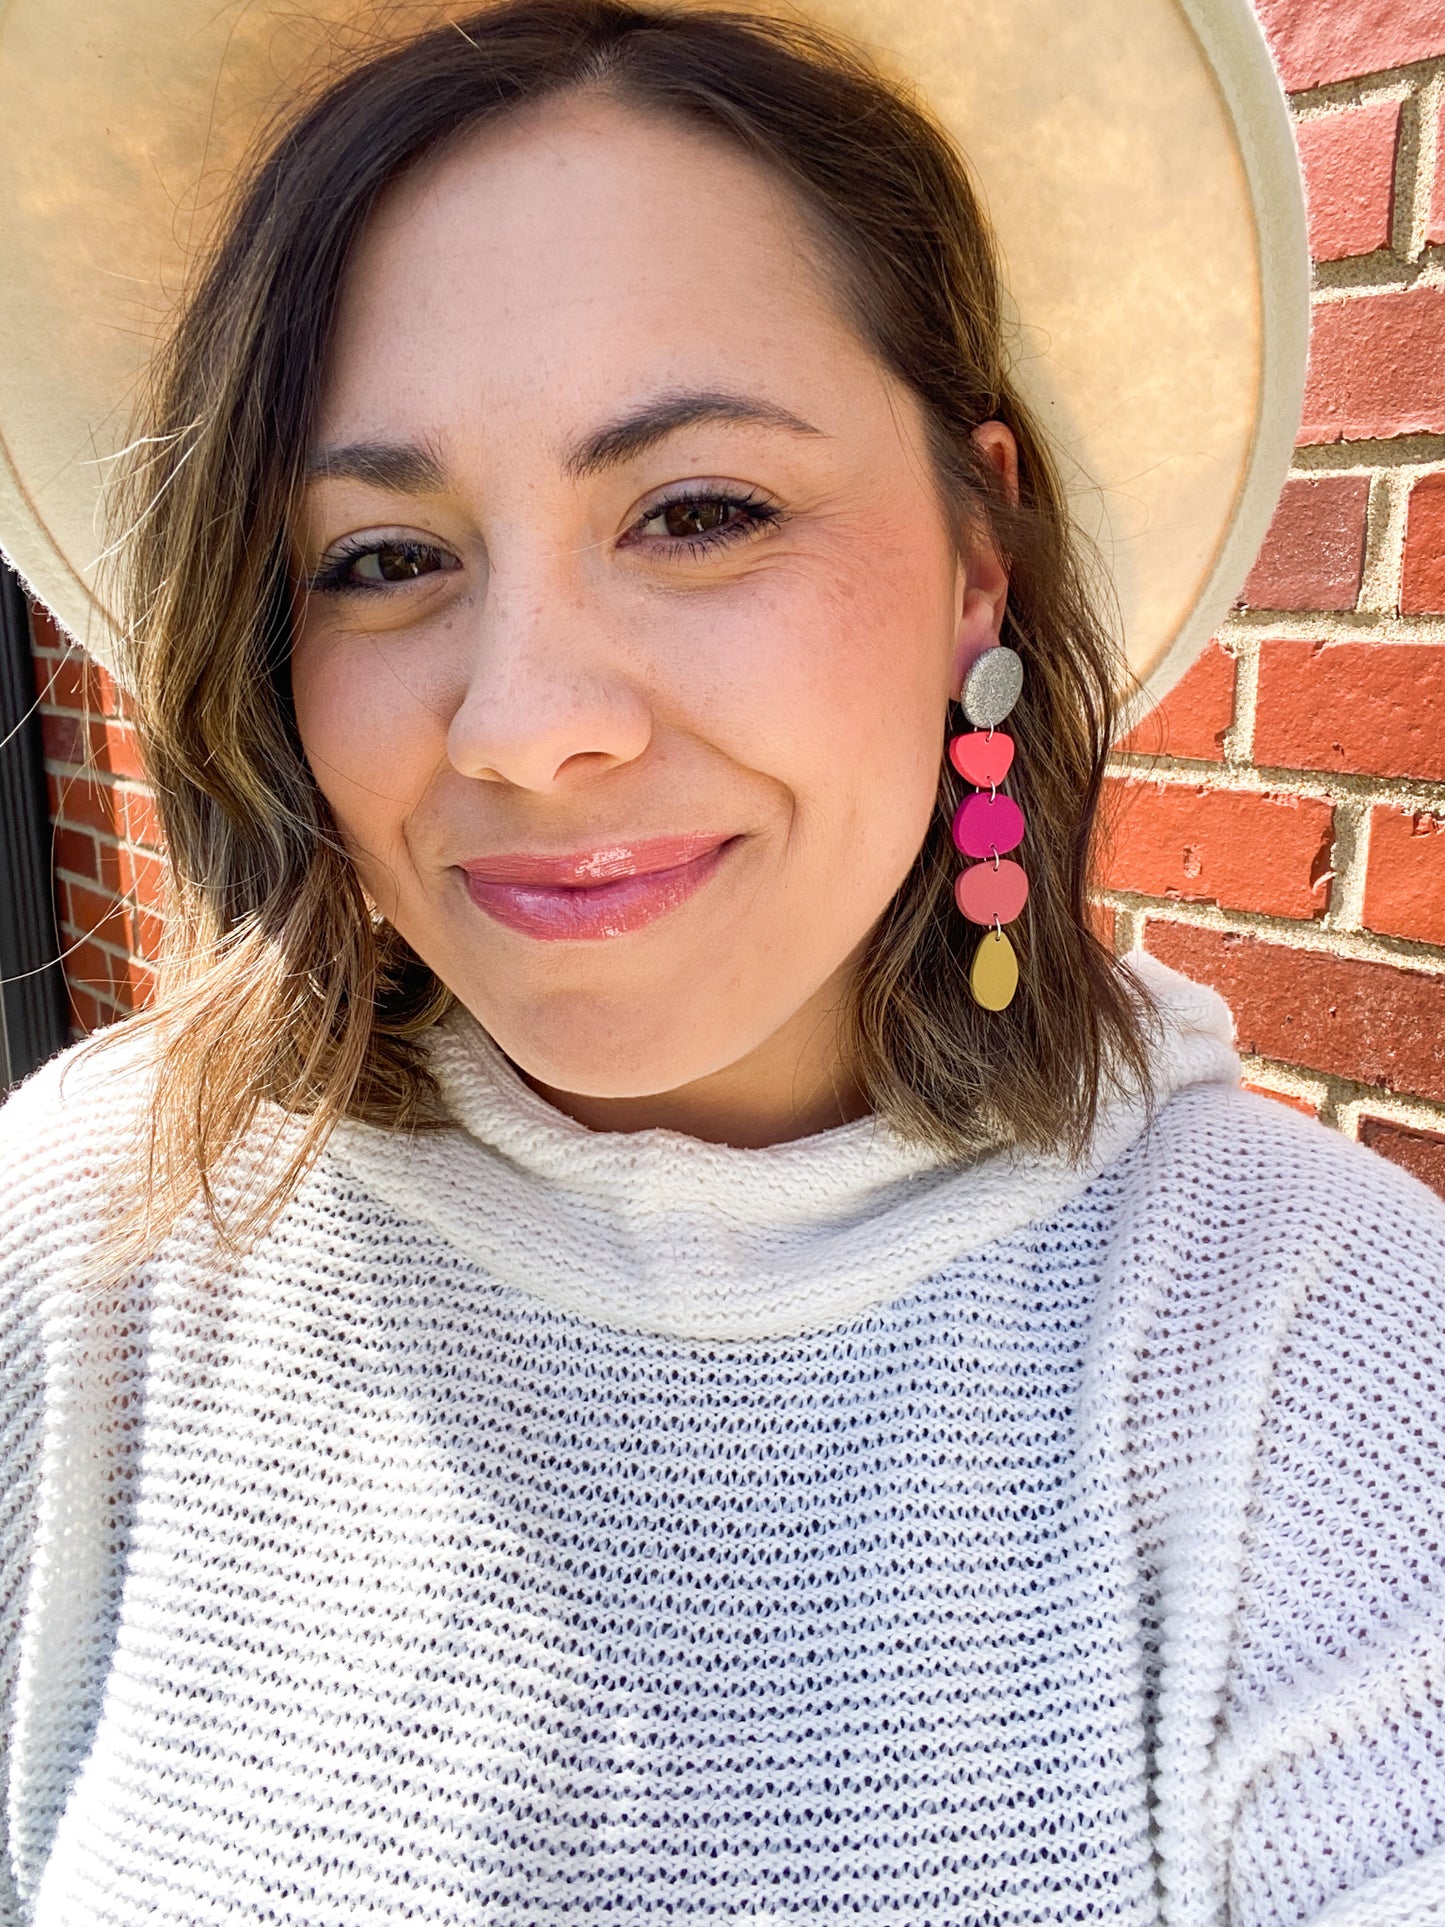 Neon and Colorful Summer Clay Earrings | Girls Trip Earrings | Trendy Bright Earrings